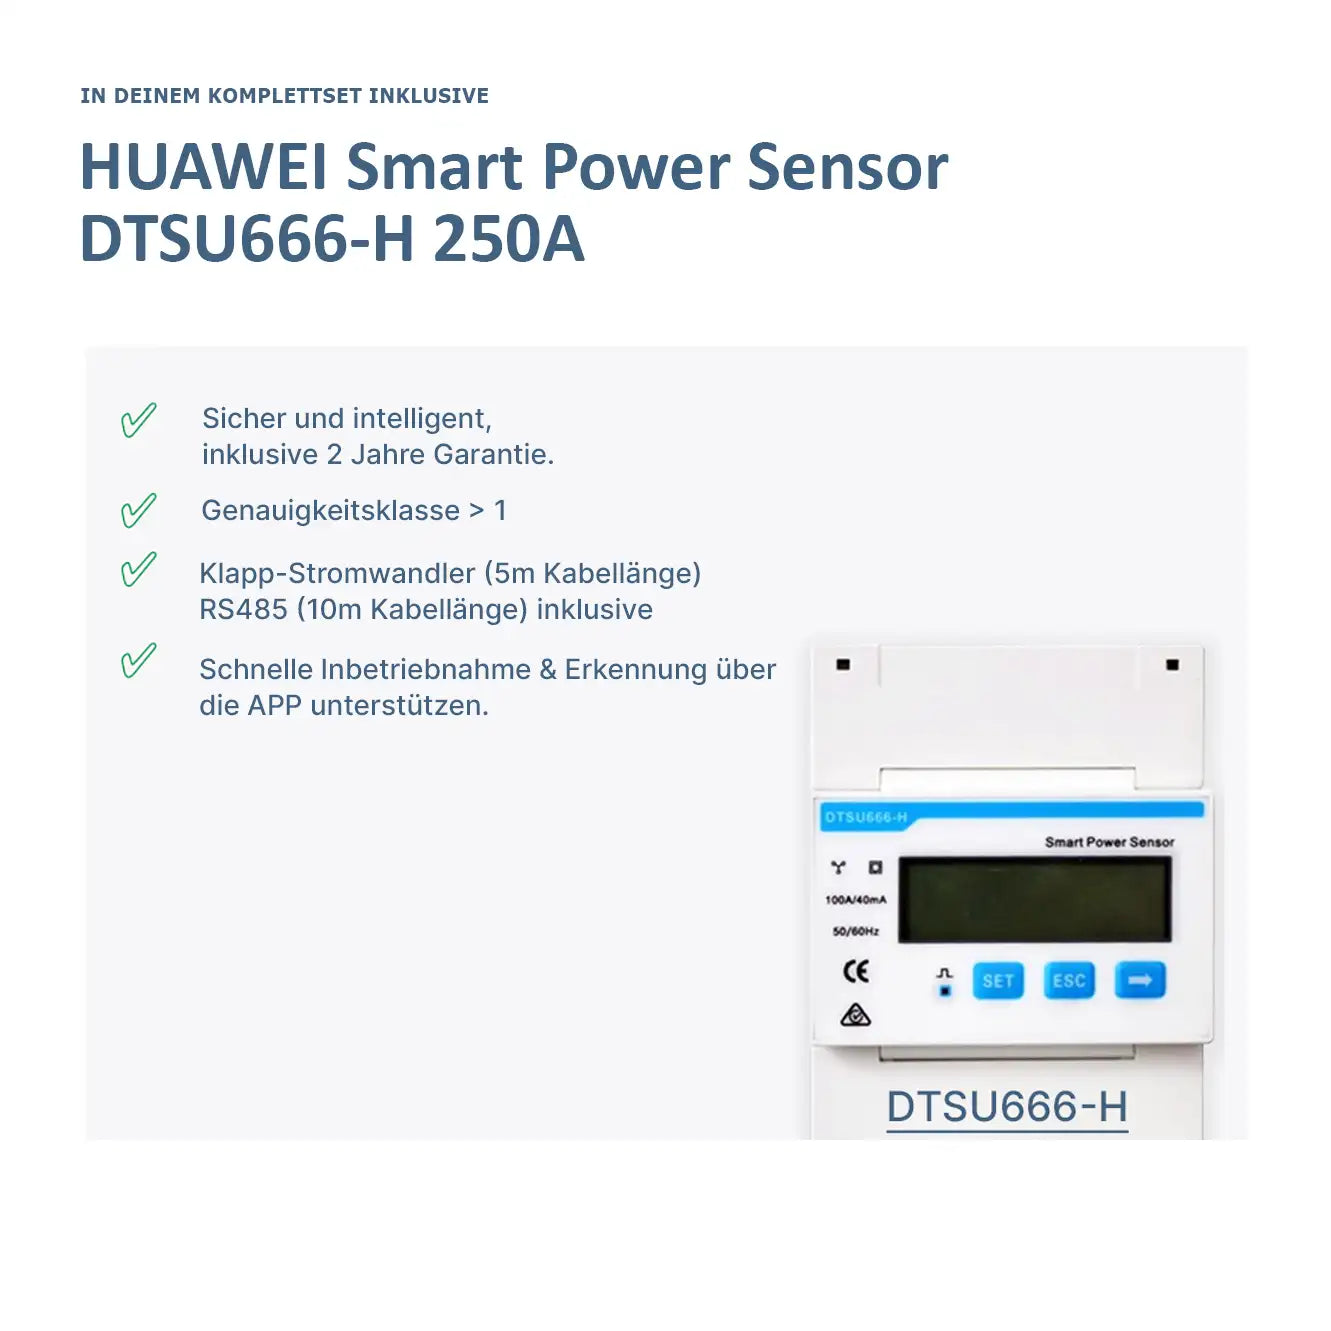 Huawei Smart Power Sensor complete set